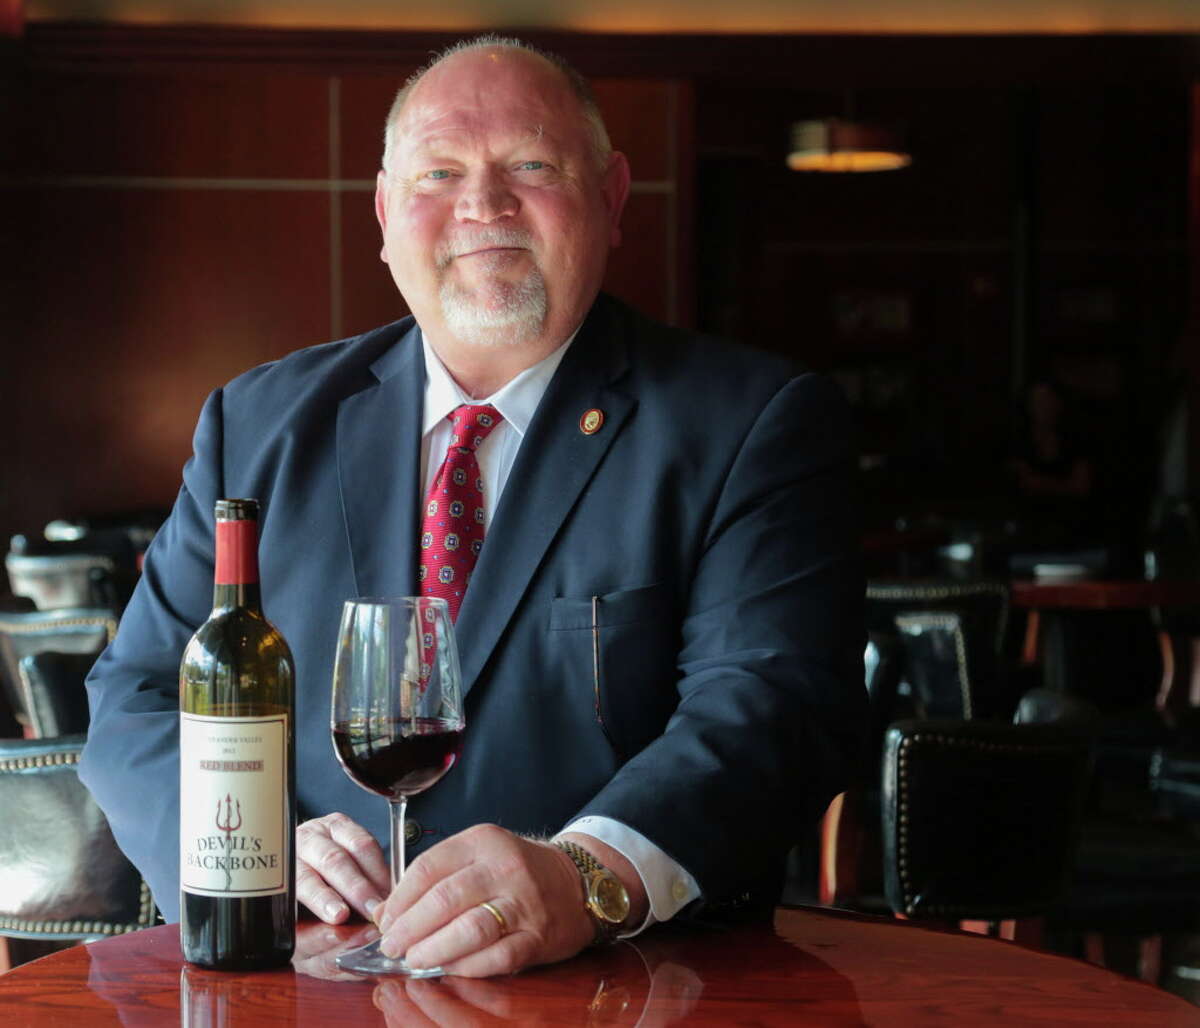 Master Sommelier Guy Stout with a bottle of Devil's Backbone a red blend wine at Sullivan's Restaurant in Houston.